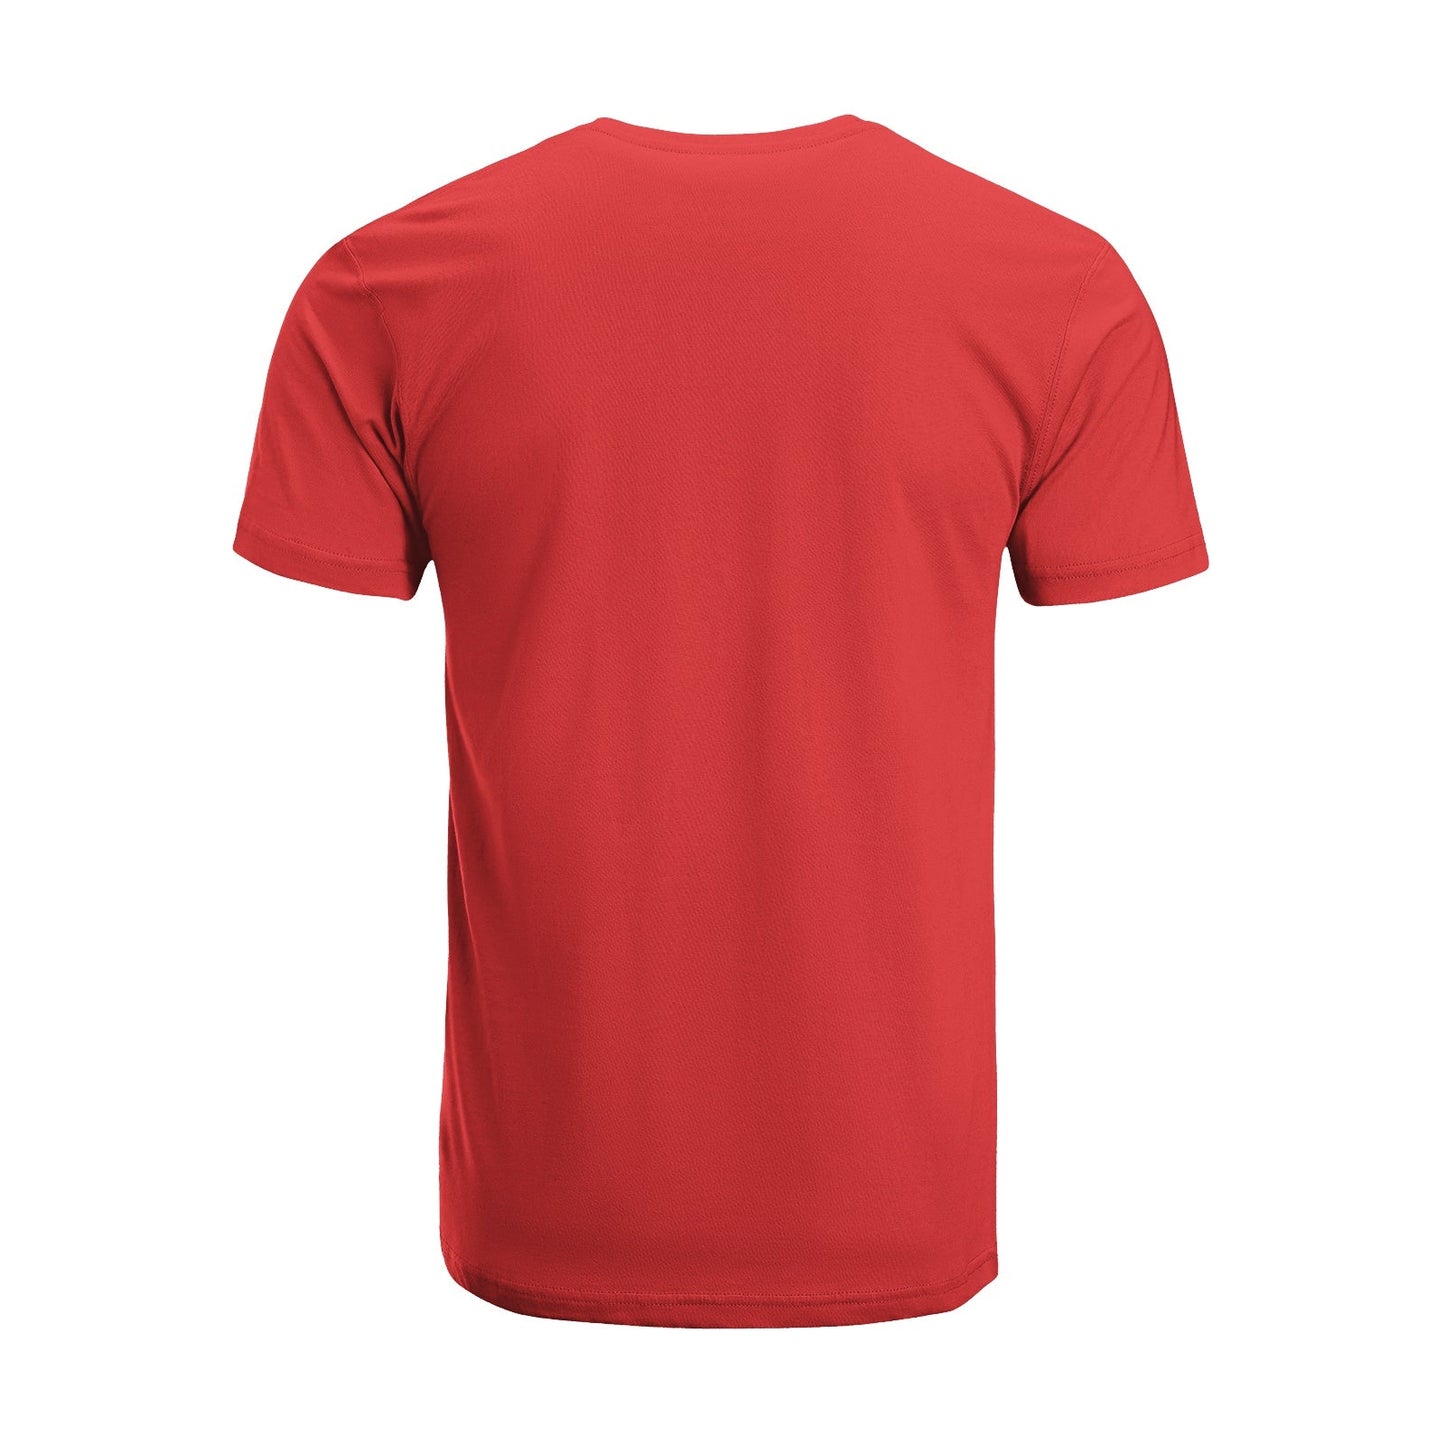 Unisex Short Sleeve Crew Neck Cotton Jersey T-Shirt USA 02